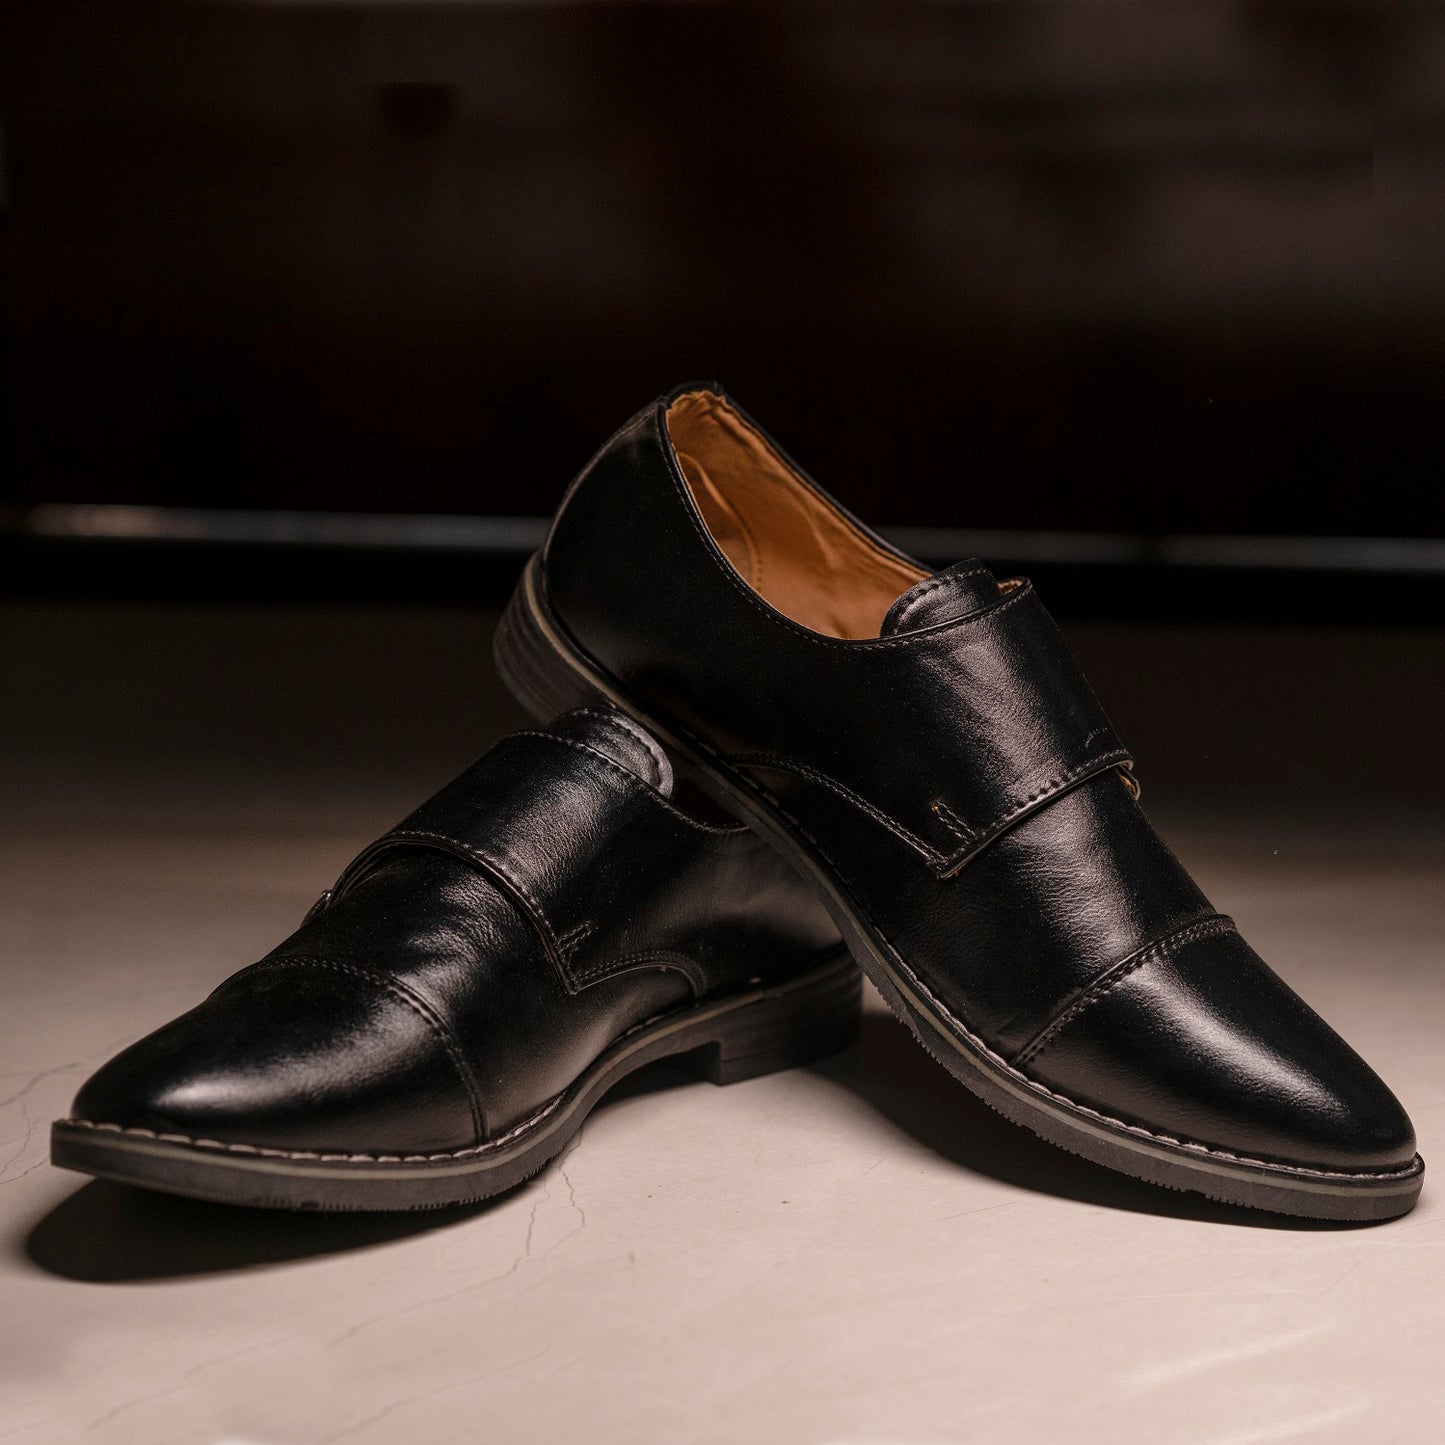 The Aurous Zeus Handcrafted Double Monk Formal Shoes - Black